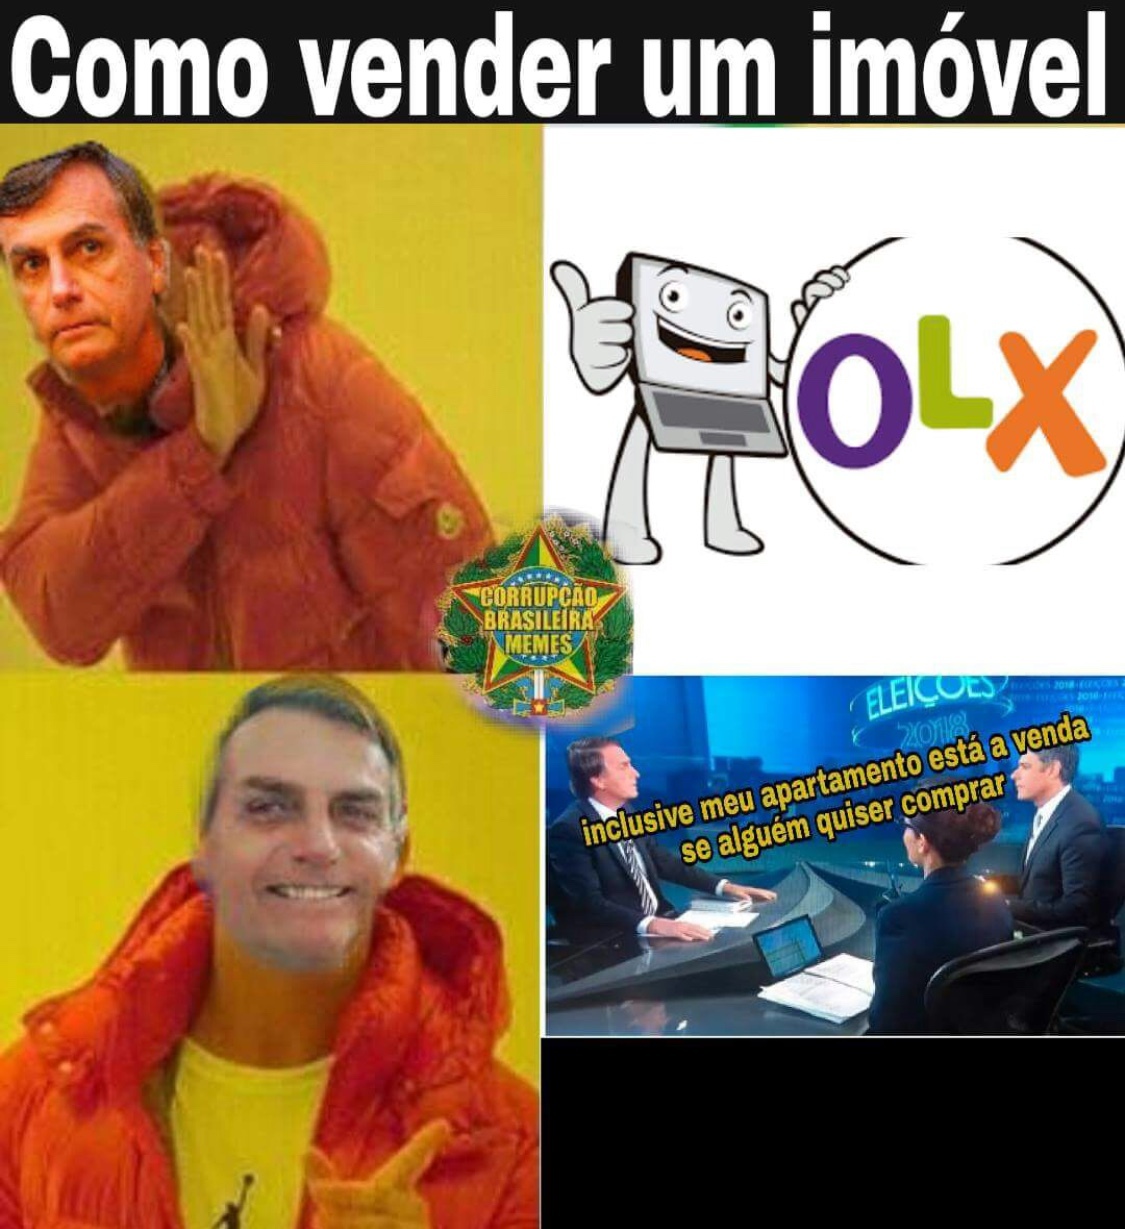 OLX - meme